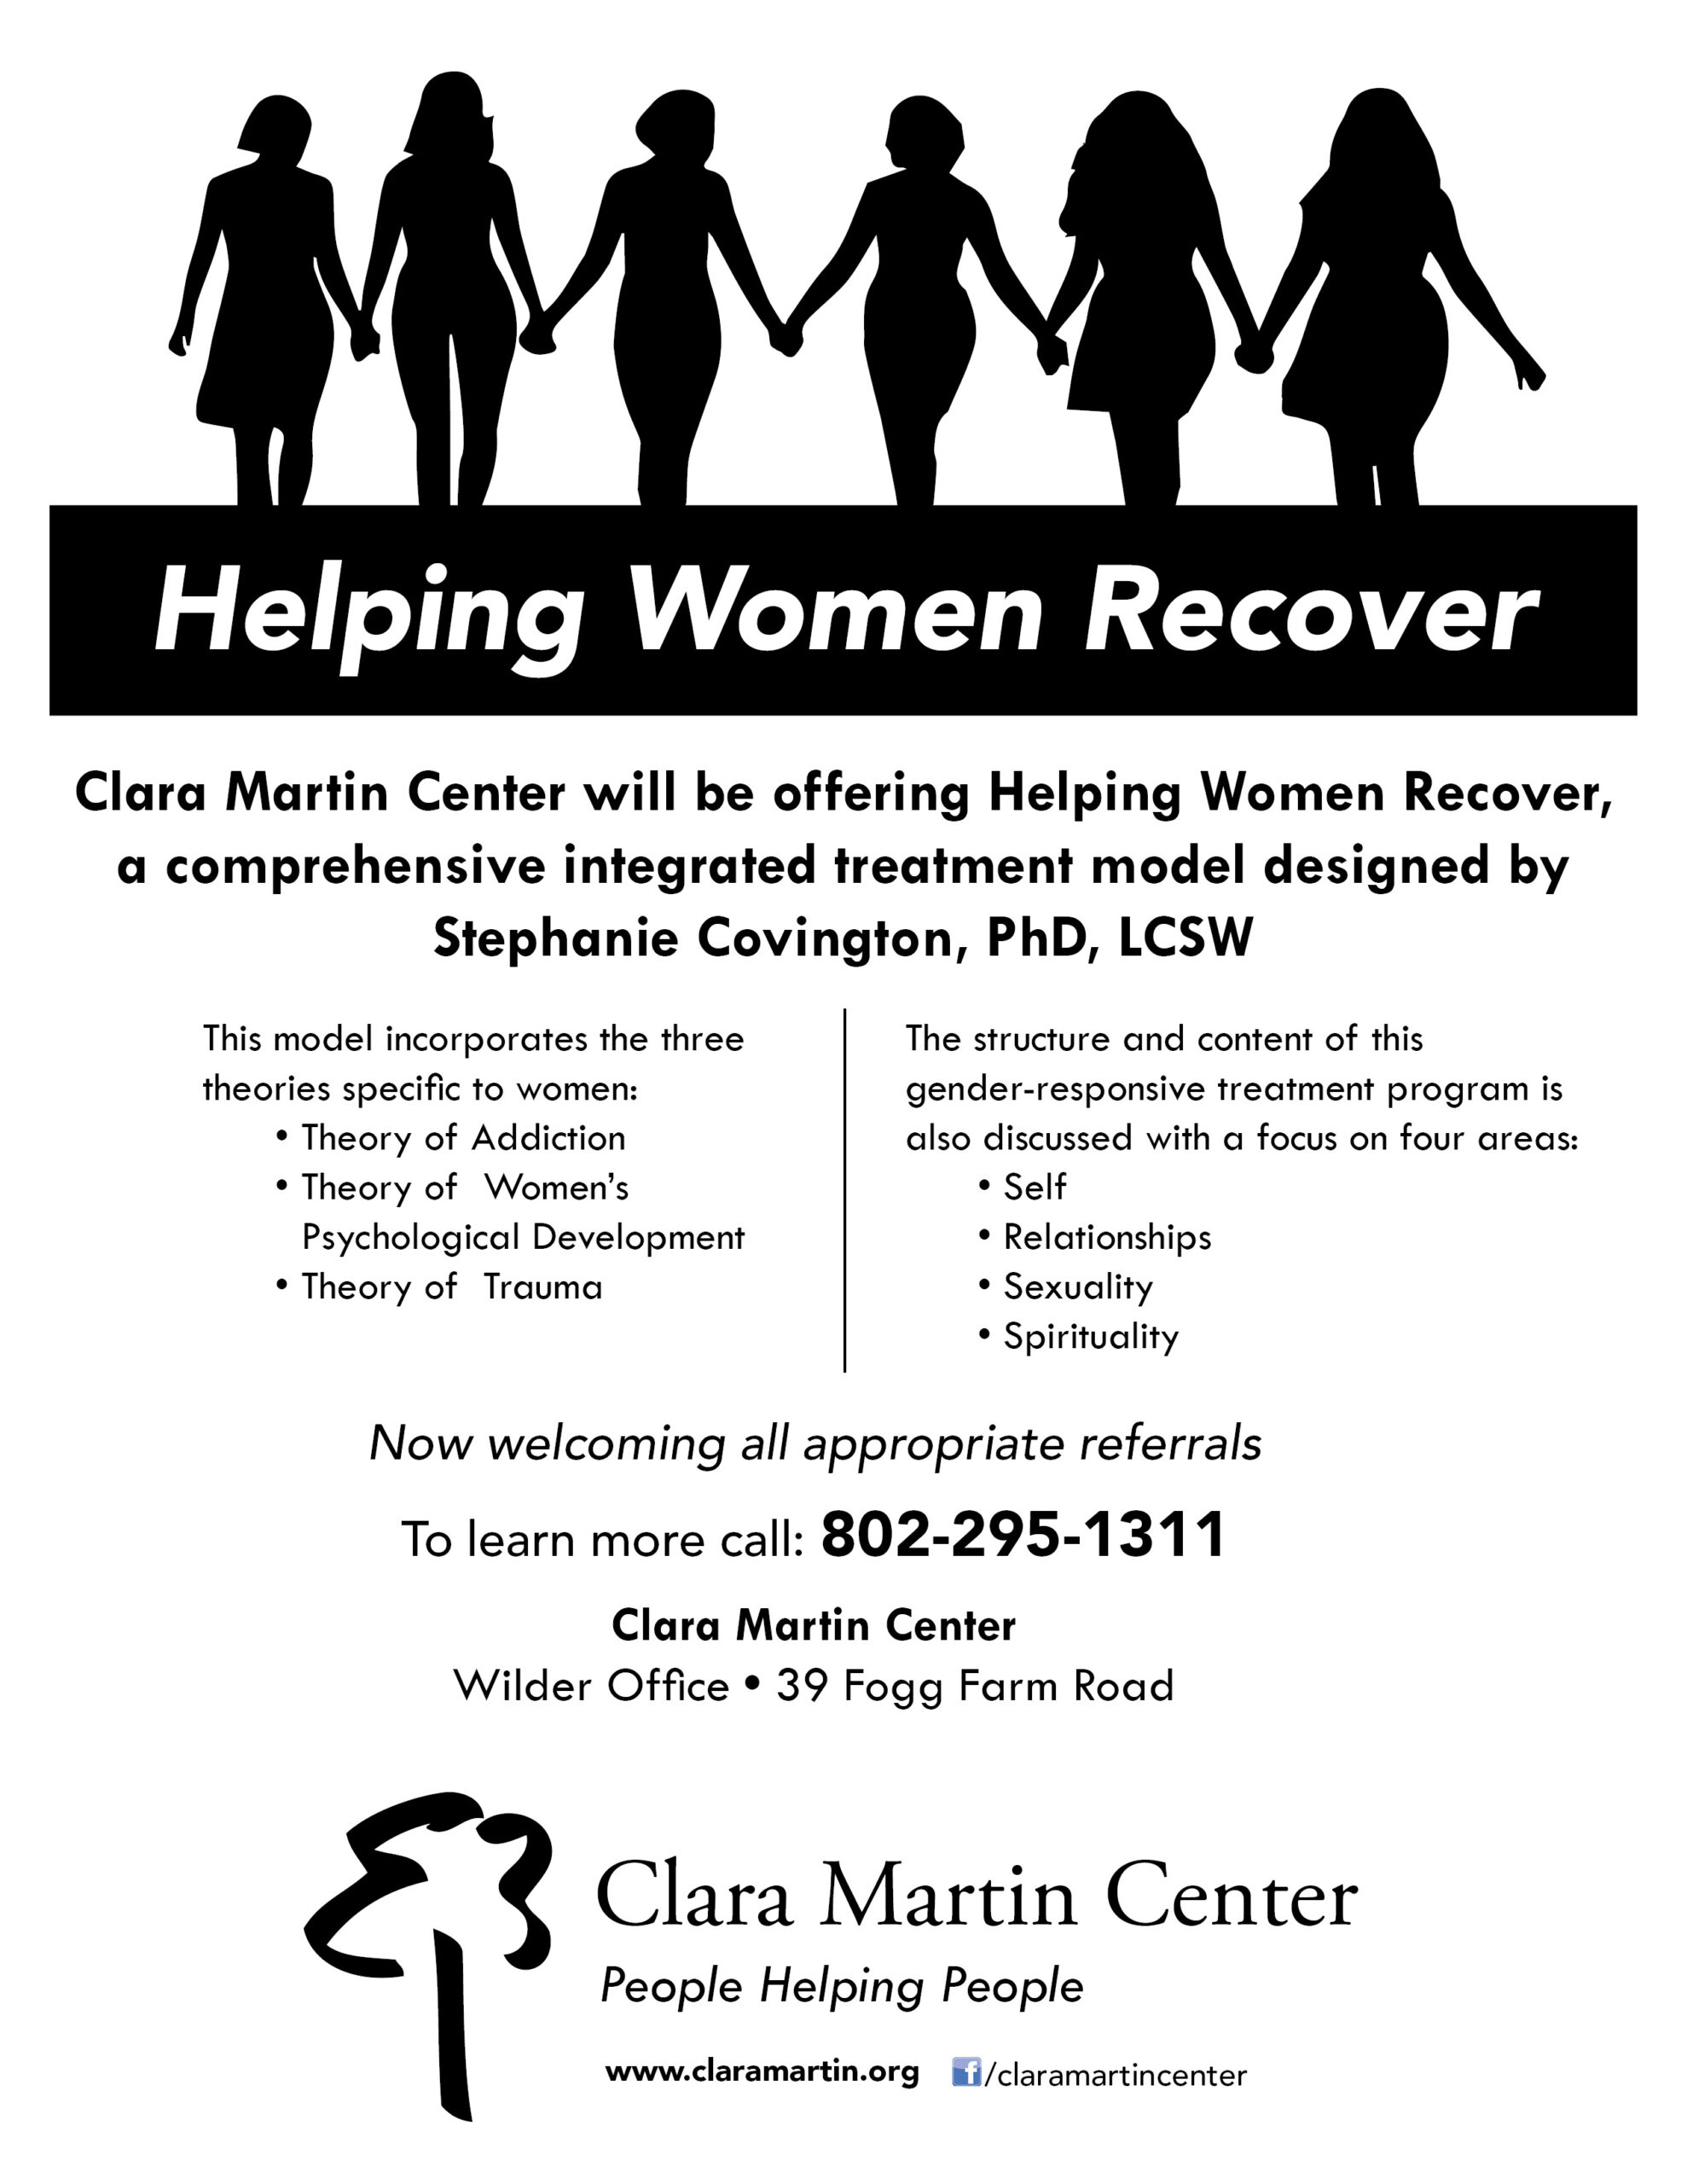 Clara Martin Center's Helping Women Recover information